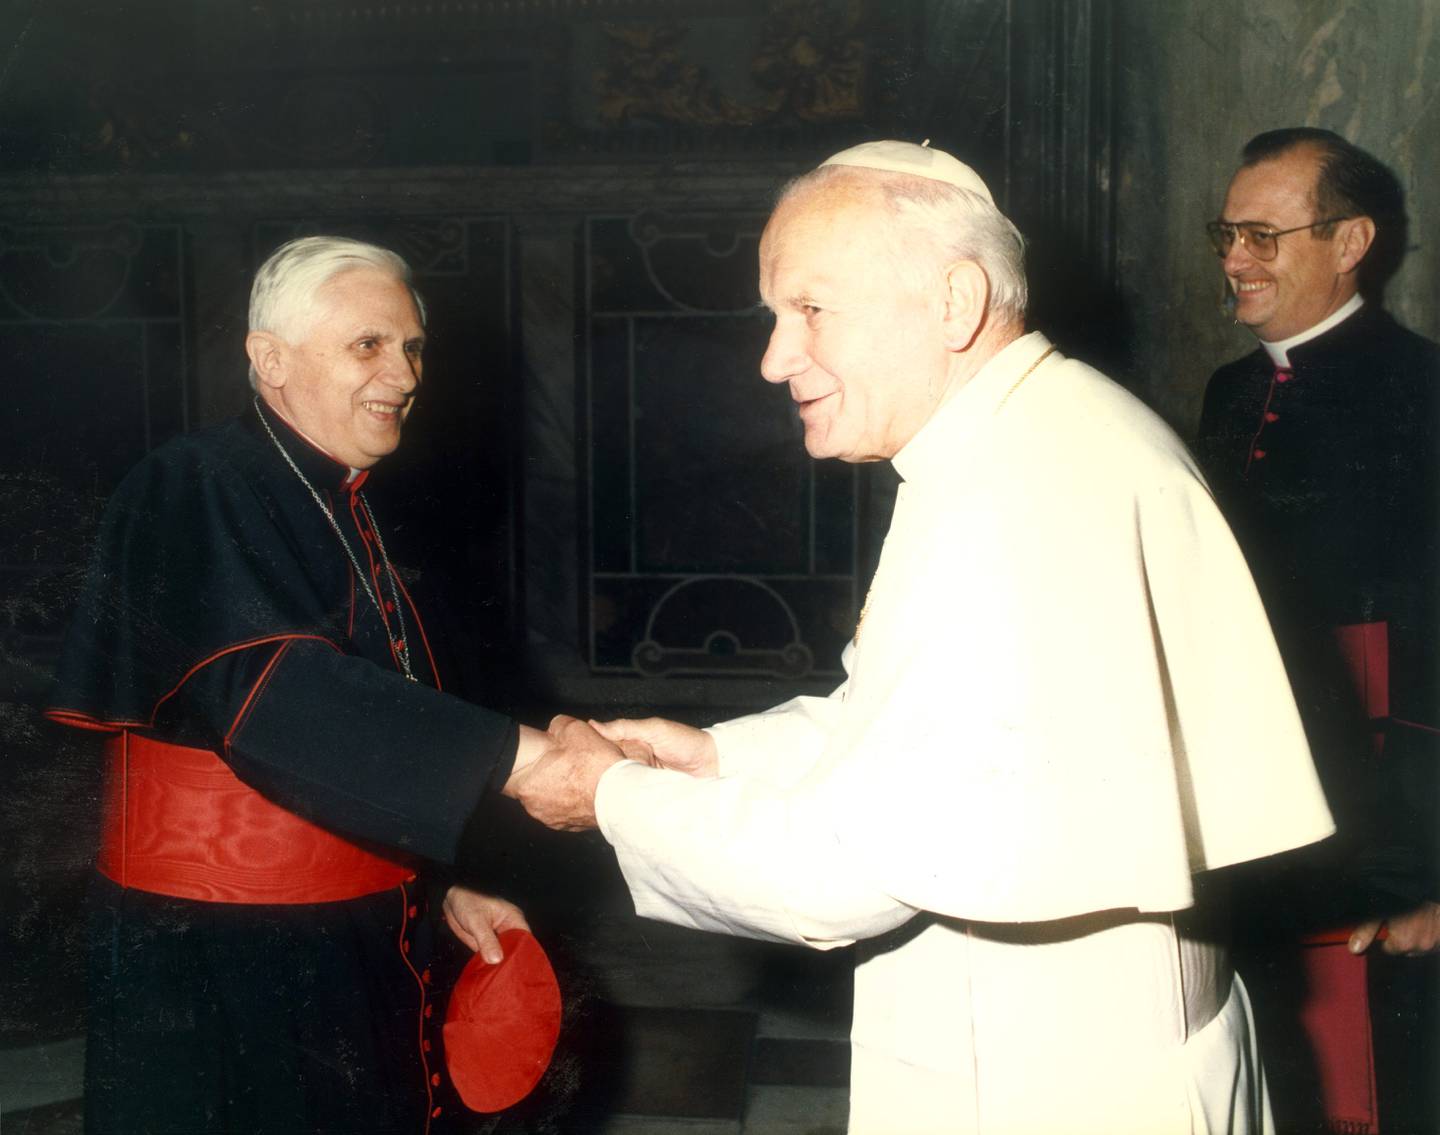 Pope John Paul II with Cardinal Ratzinger. API via Getty Images